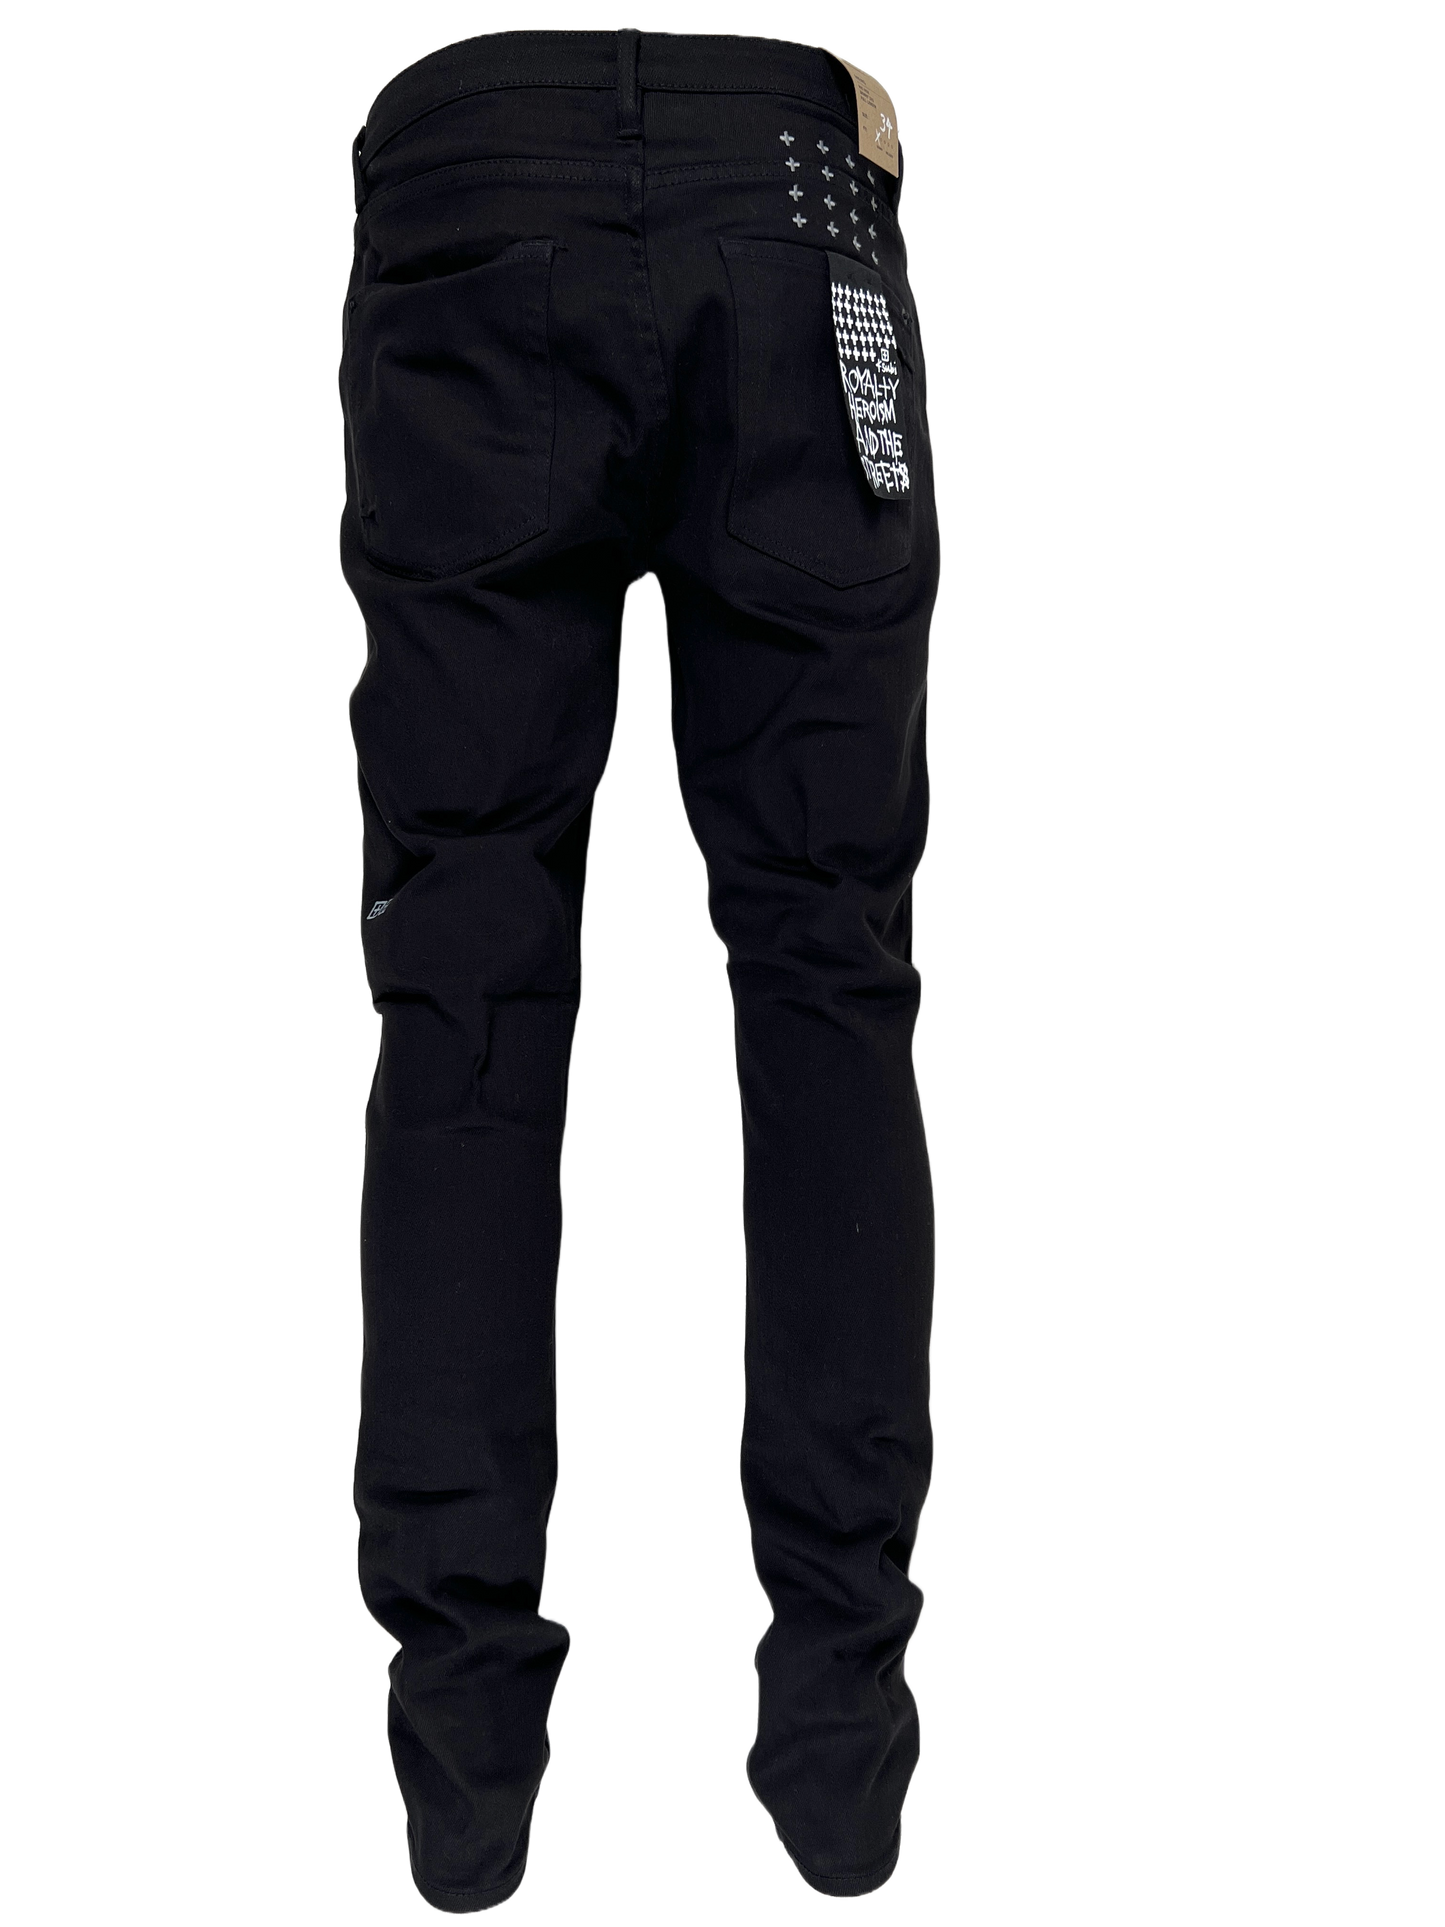 The back view of a pair of black, ripped Ksubi Van Winkle ACE Black Slice jeans.